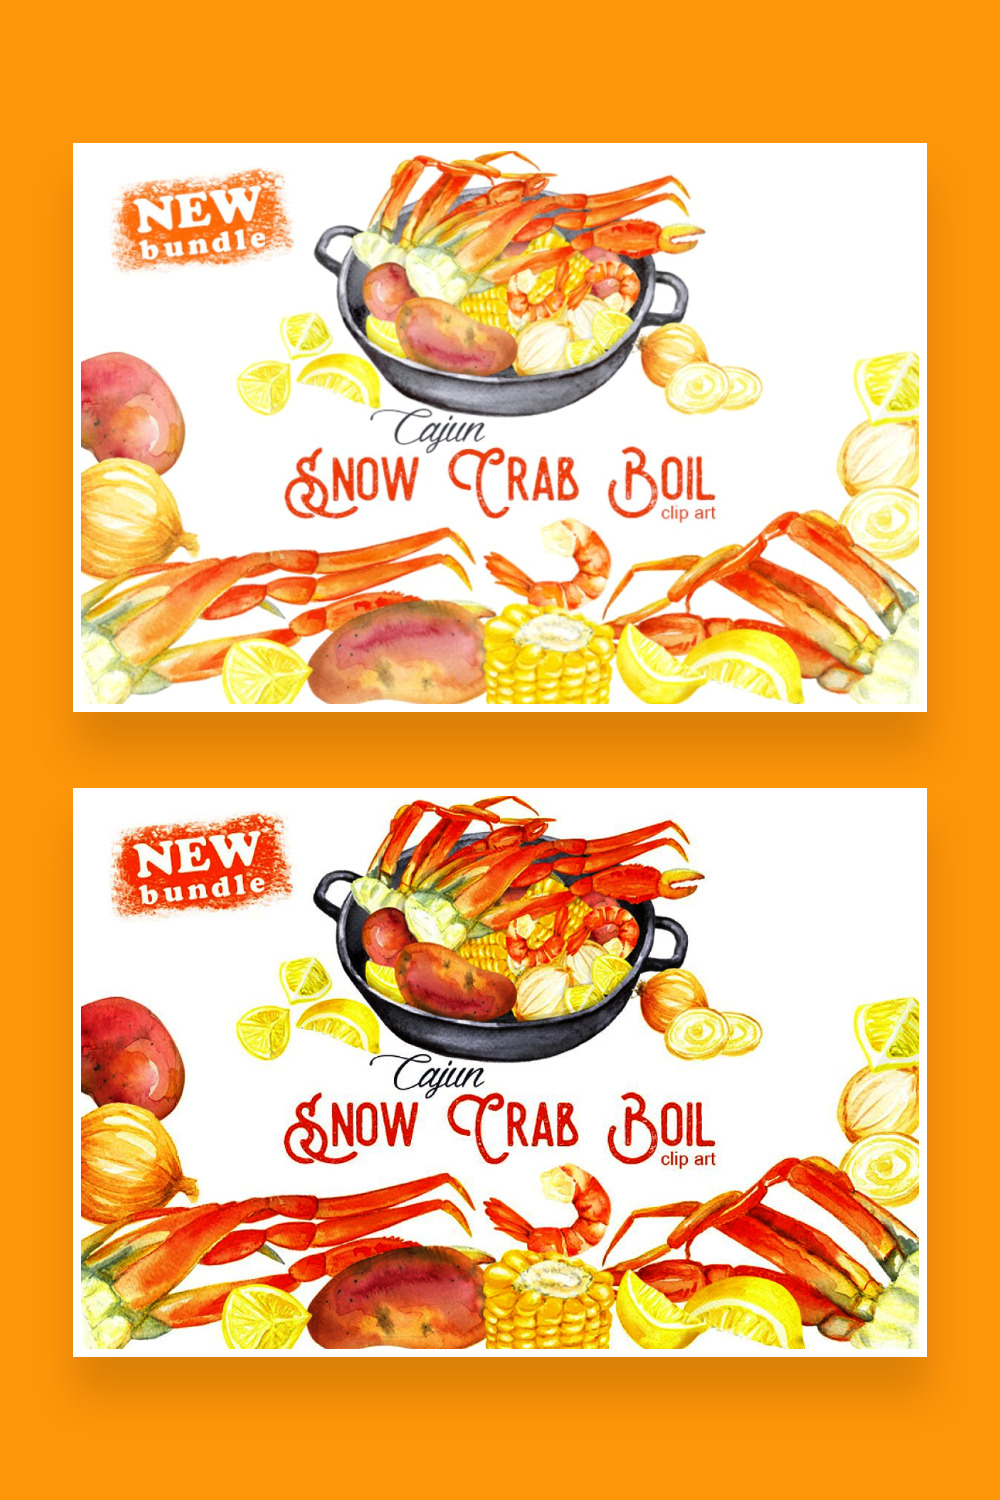 Cajun snow crab boil pinterest.